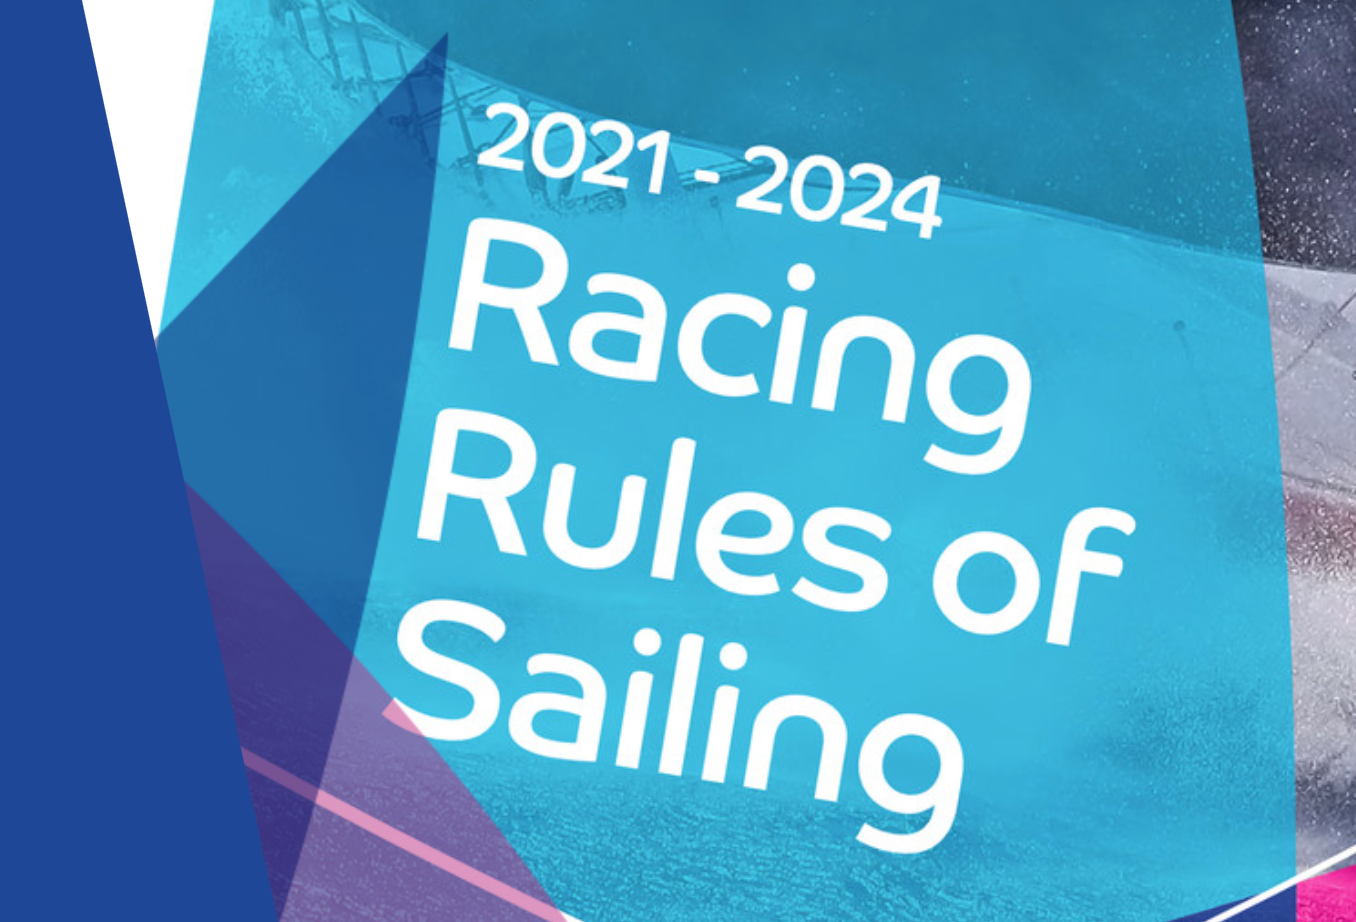 2021 – 2024 Racing Rules of Sailing Image